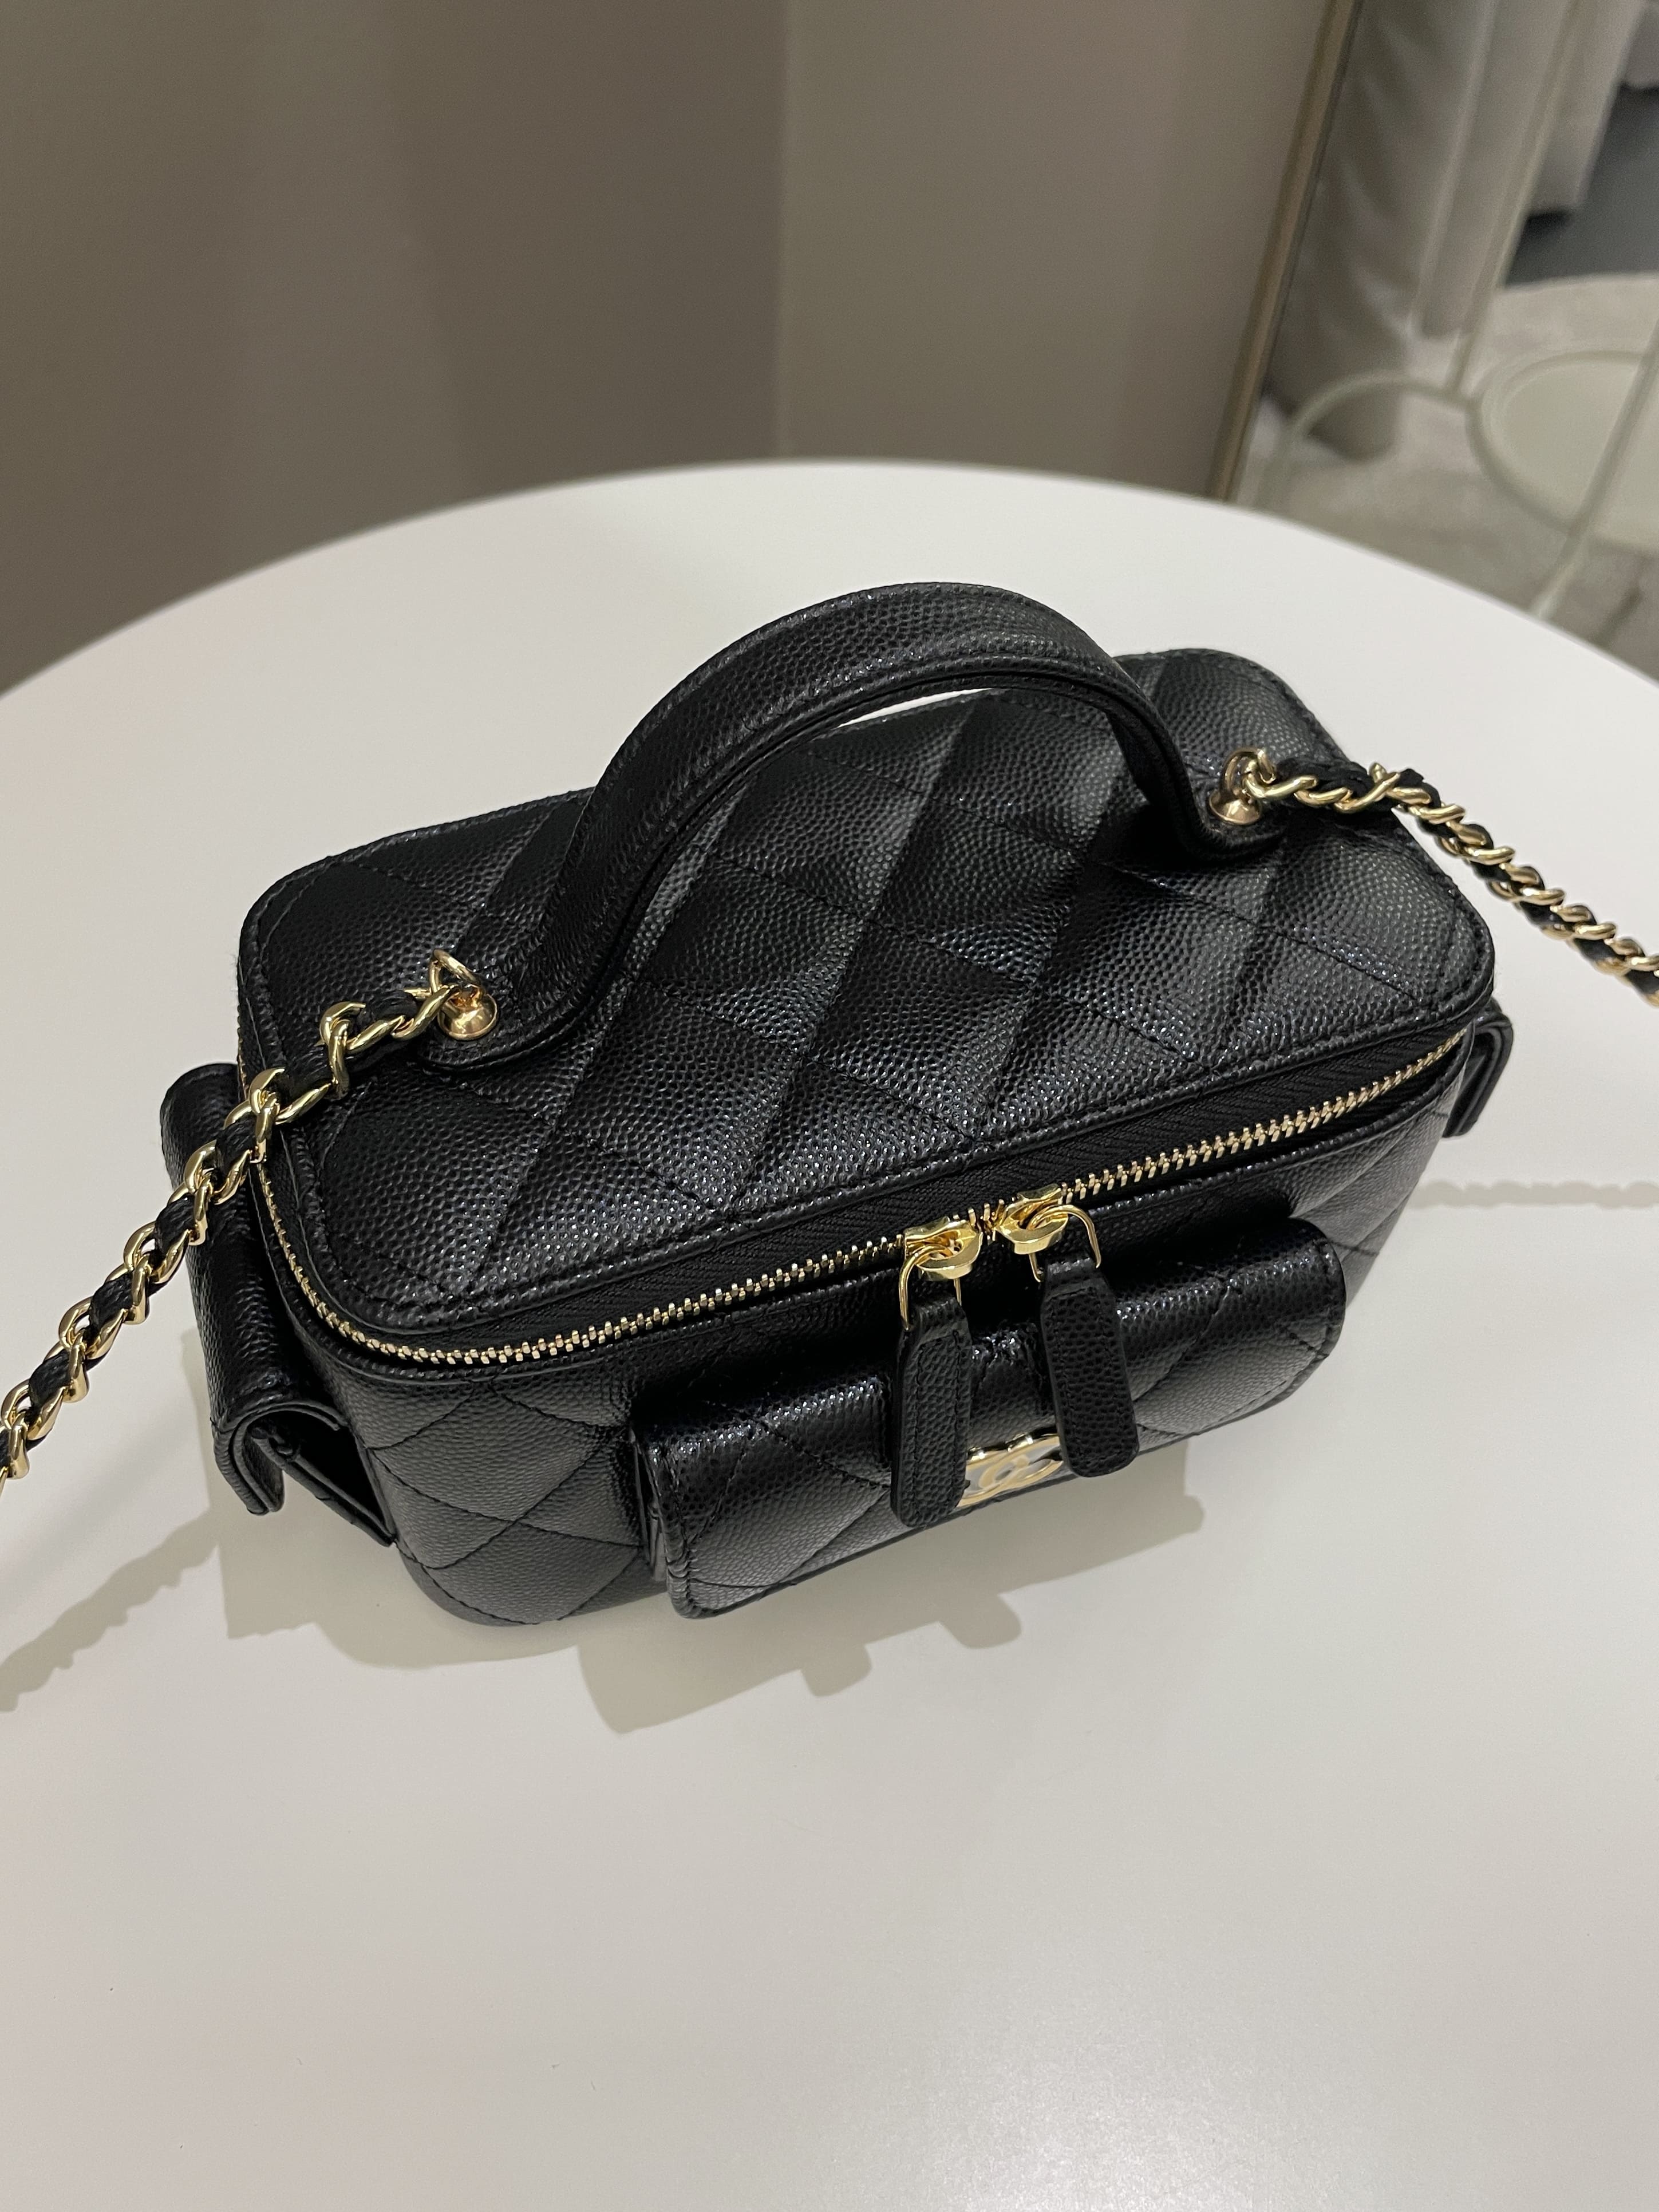 Chanel Polly Pocket Multi Pocket Vanity Case Bag Black Caviar